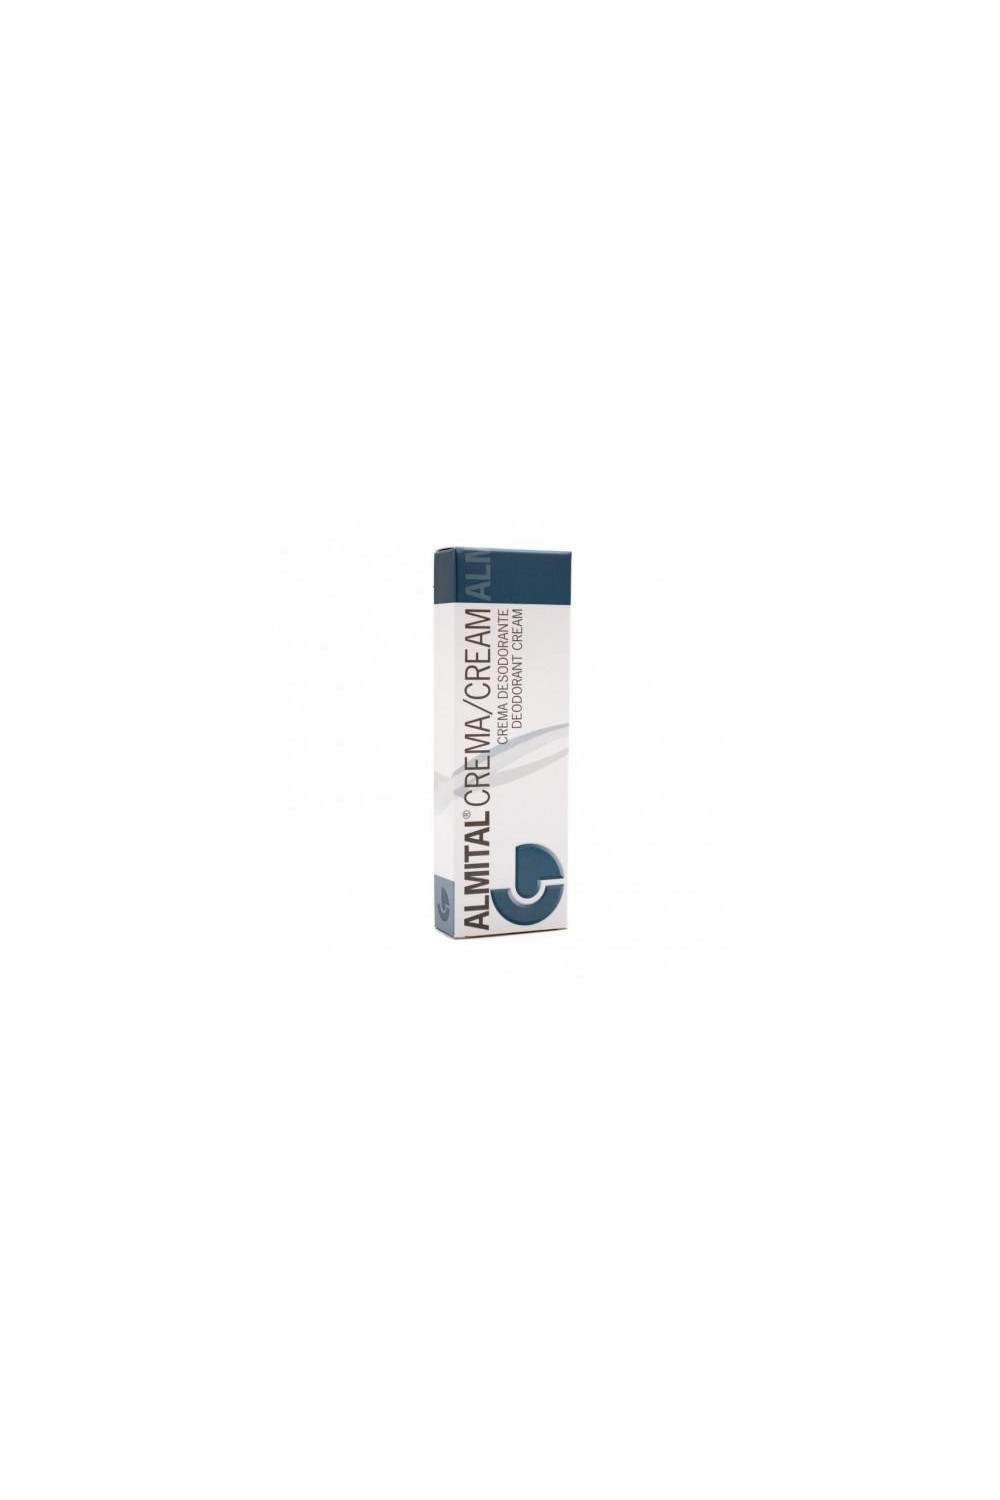 Unipharma Almital™ Neo Cream Tube 75ml